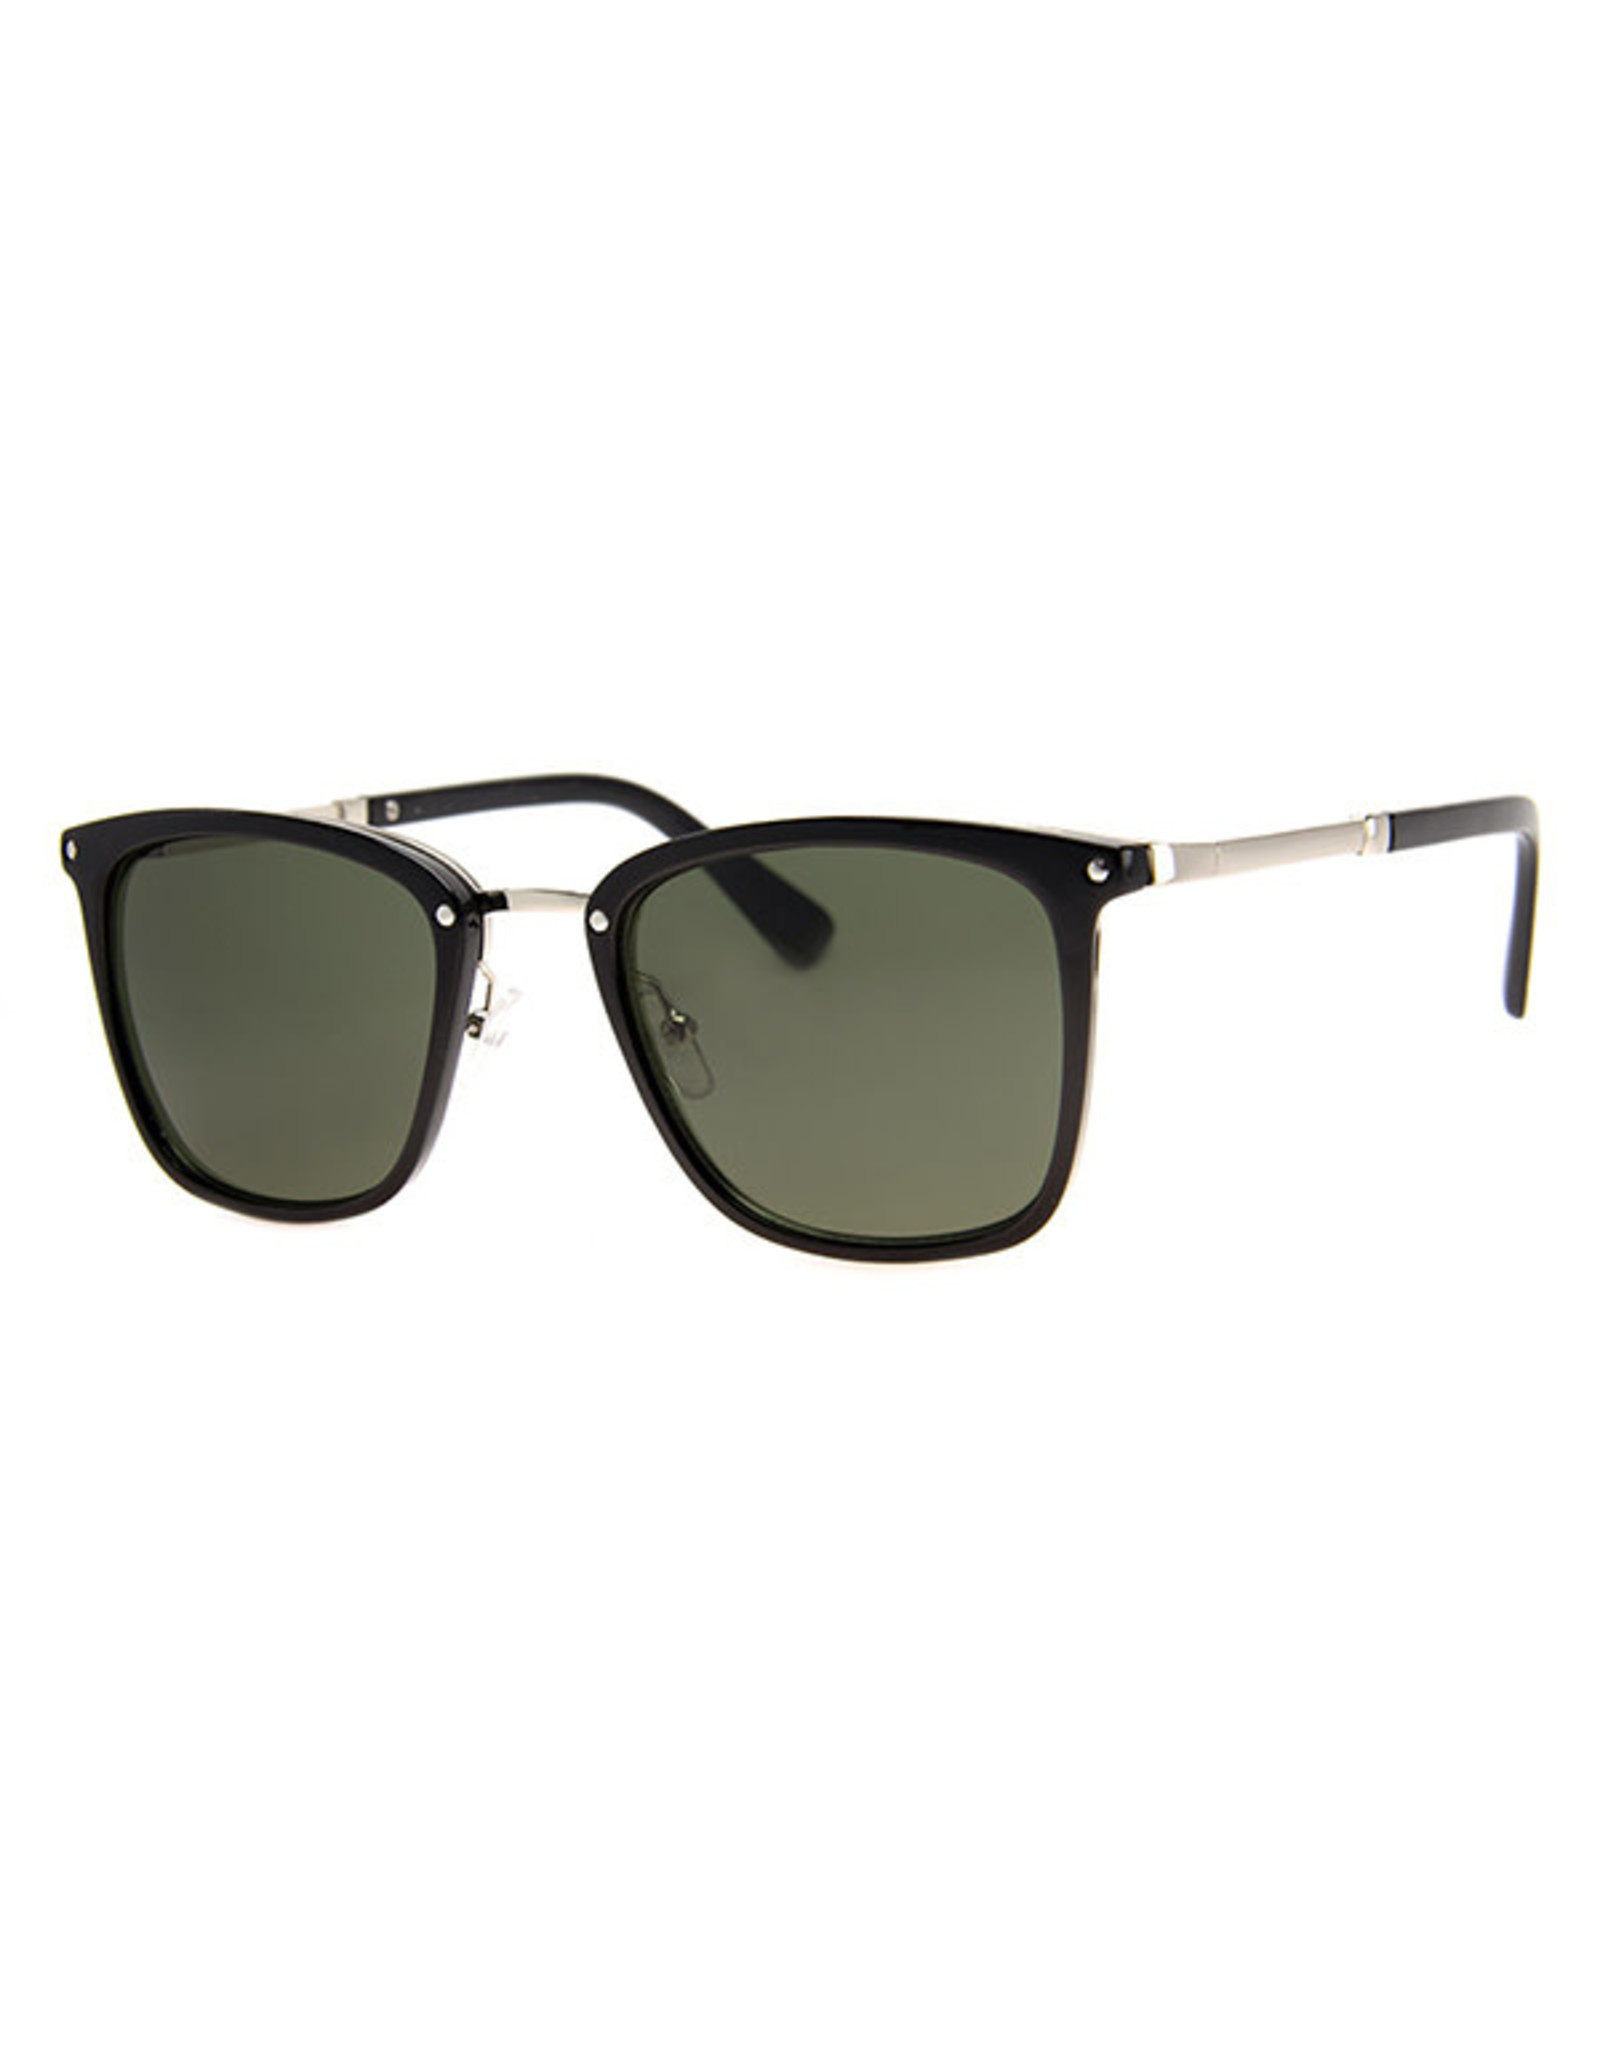 AJM - Rectangle Frame Sunglasses / Black or Tortoise